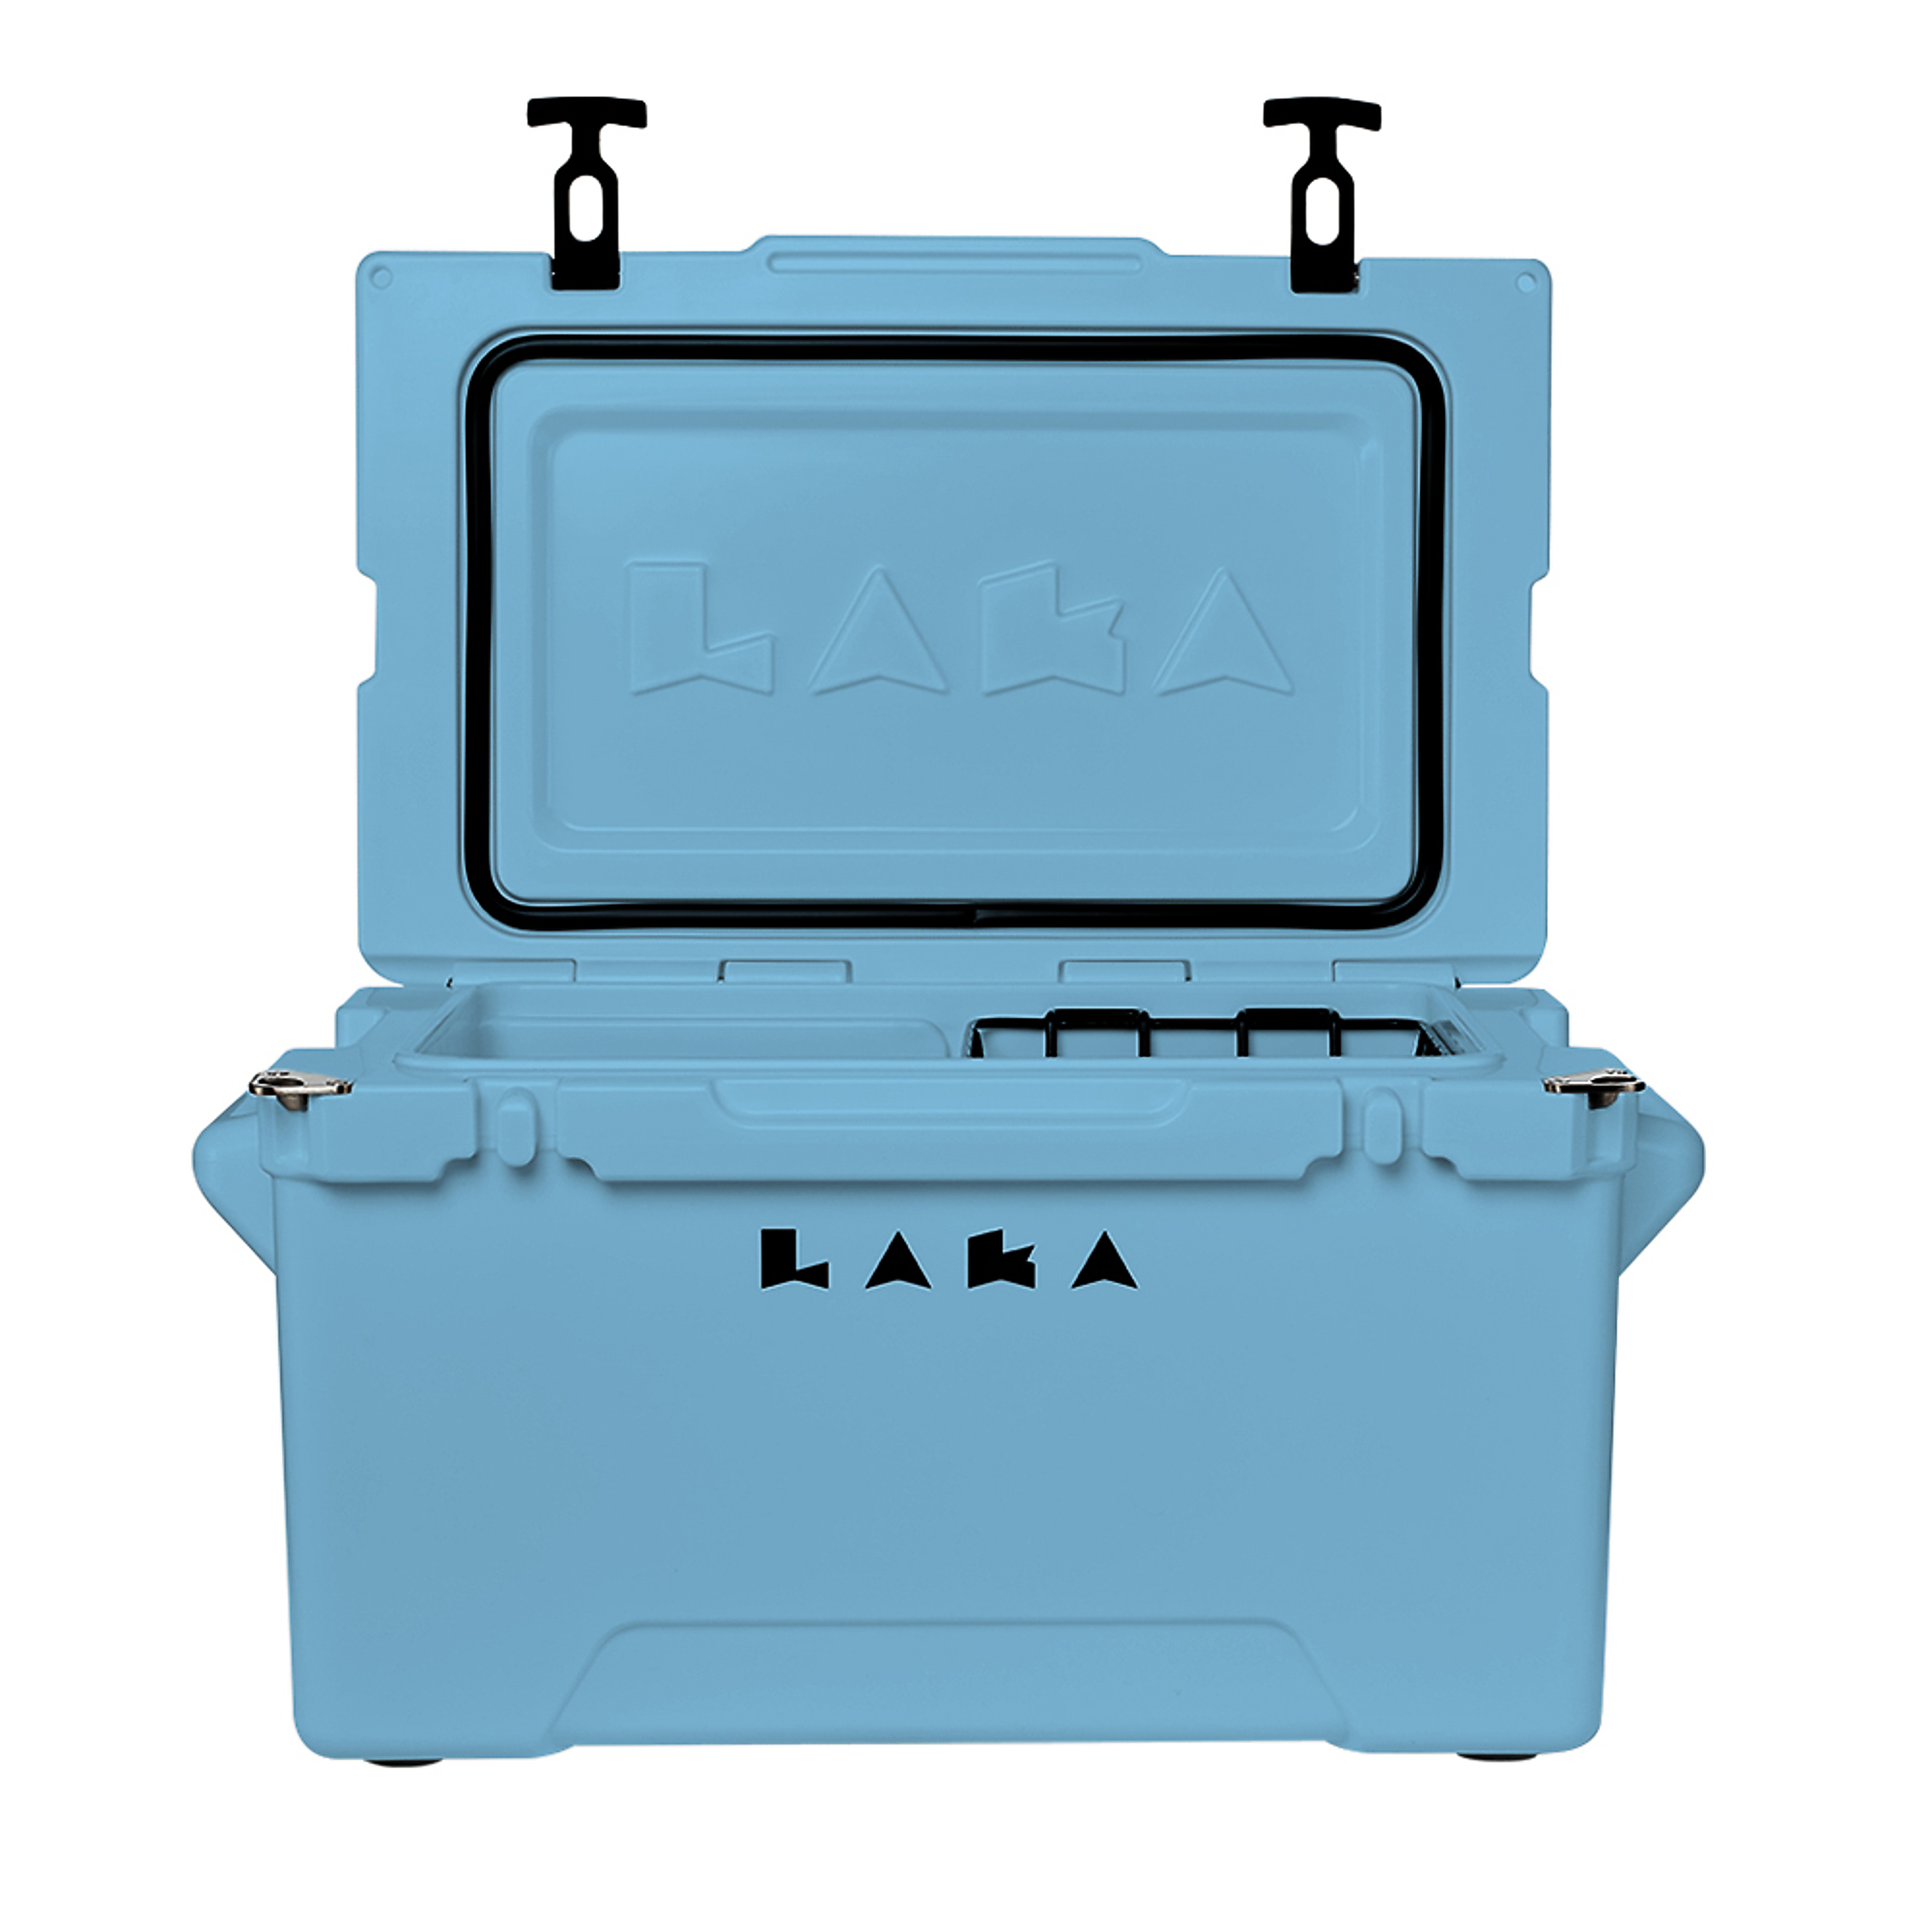 LAKA Cooler, 45 Quart Cooler - Blue, Capacity 11.25 Gal, Model 1060